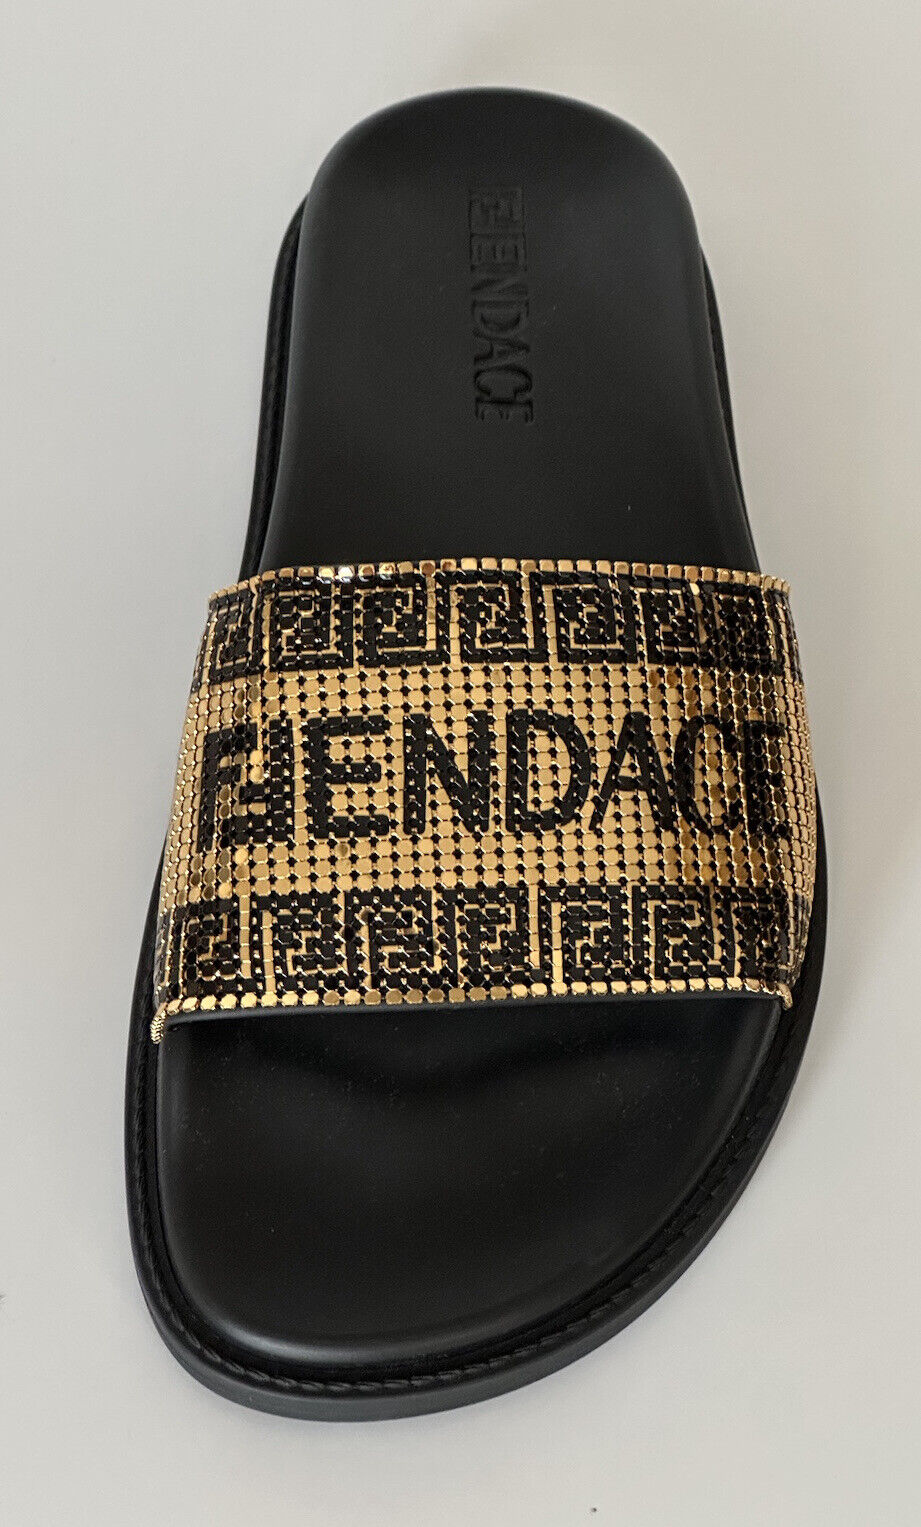 NIB $1550 Fendace Fendi&Versace Metal Mesh Sandals Black 9 US/39 Euro IT 8X8324